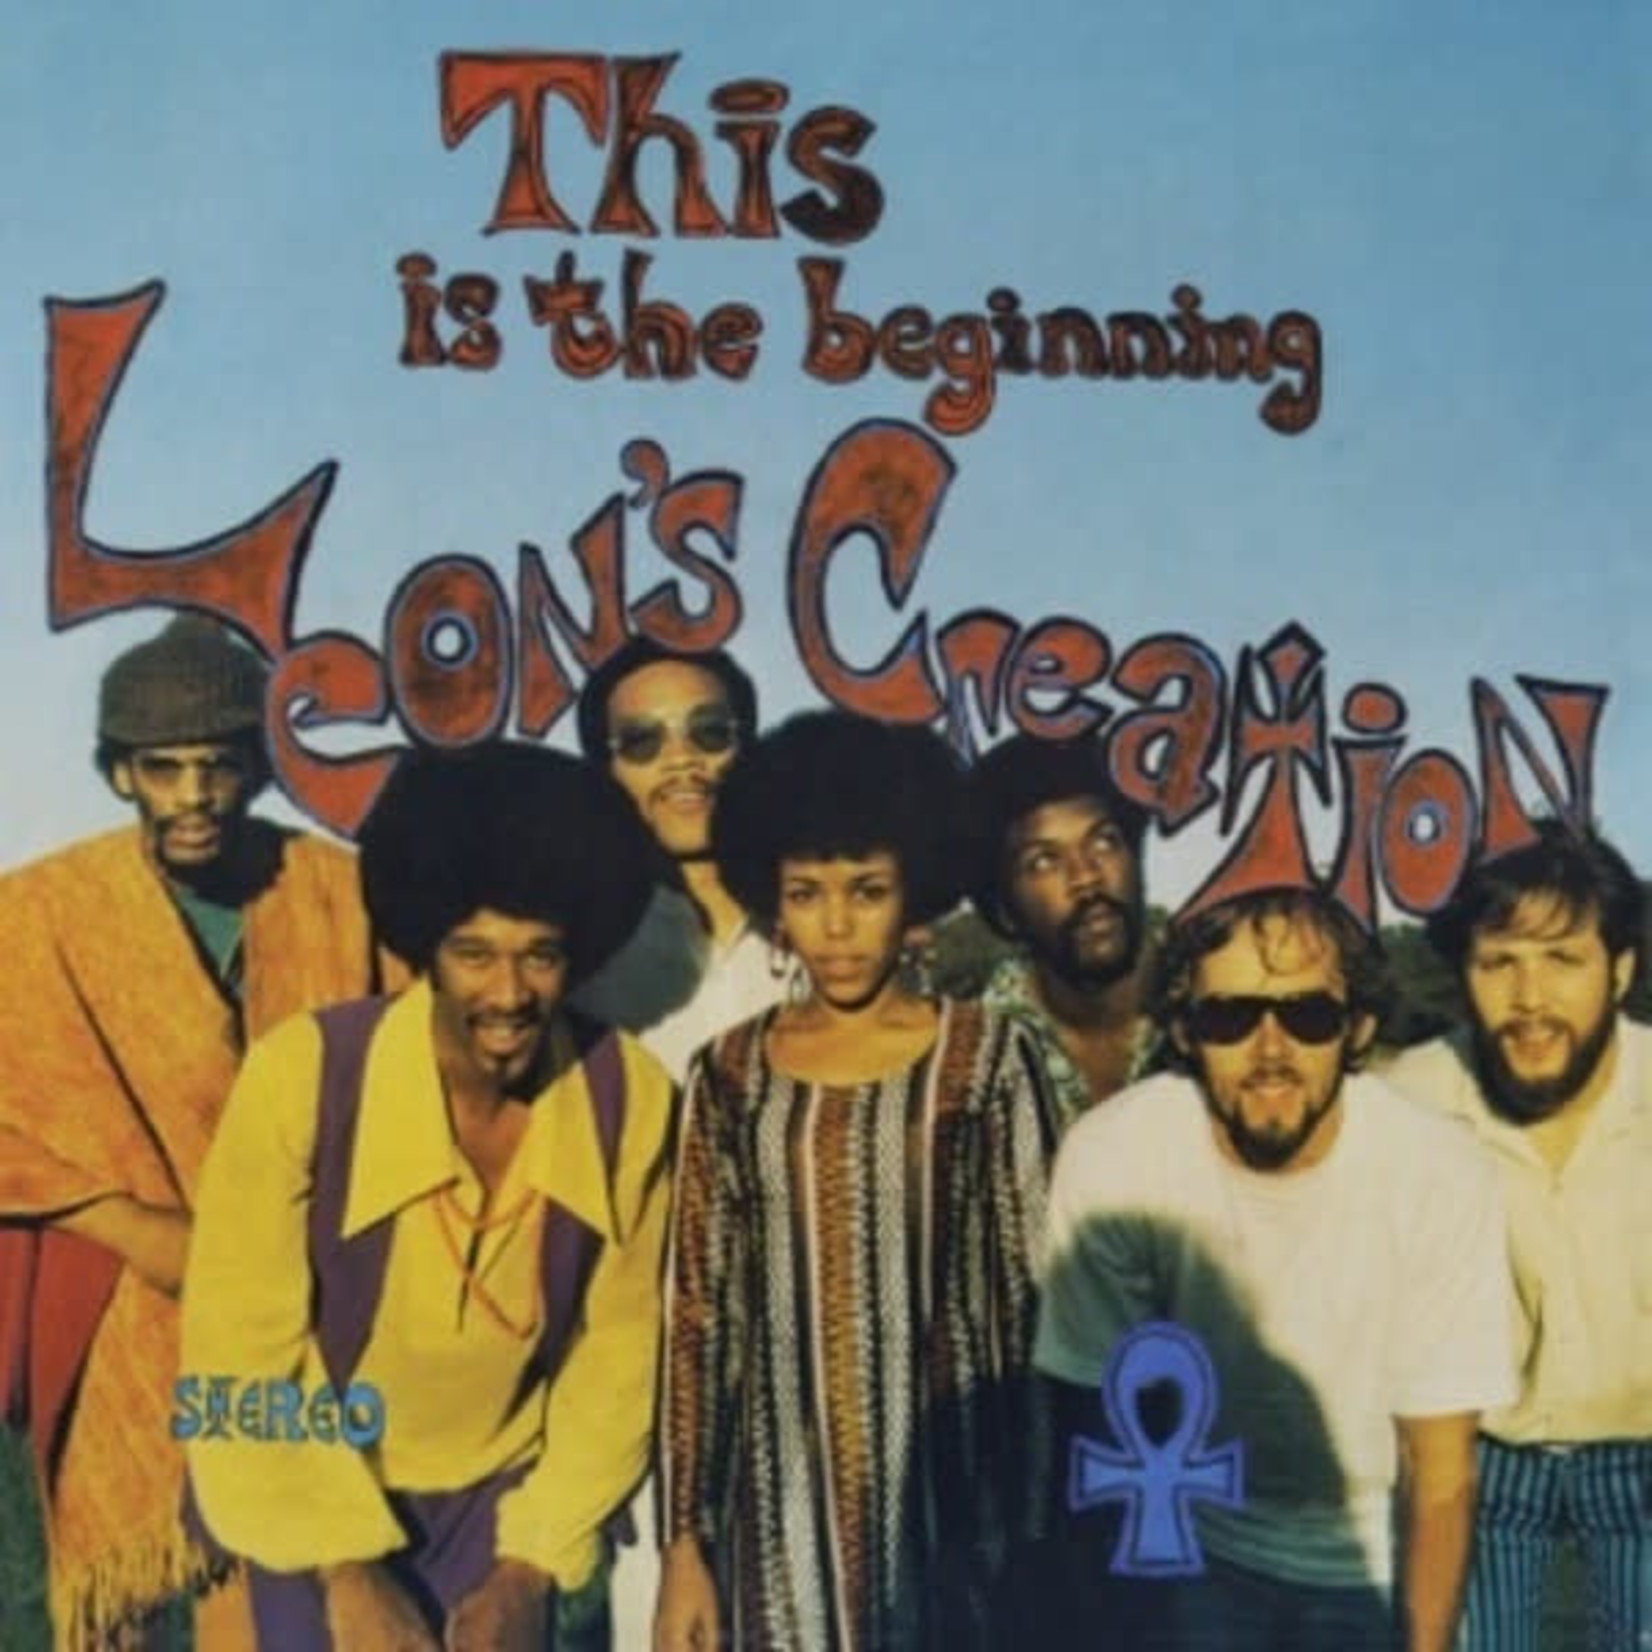 Acid Jazz Leon's Creation - This Is The Beginning (LP)